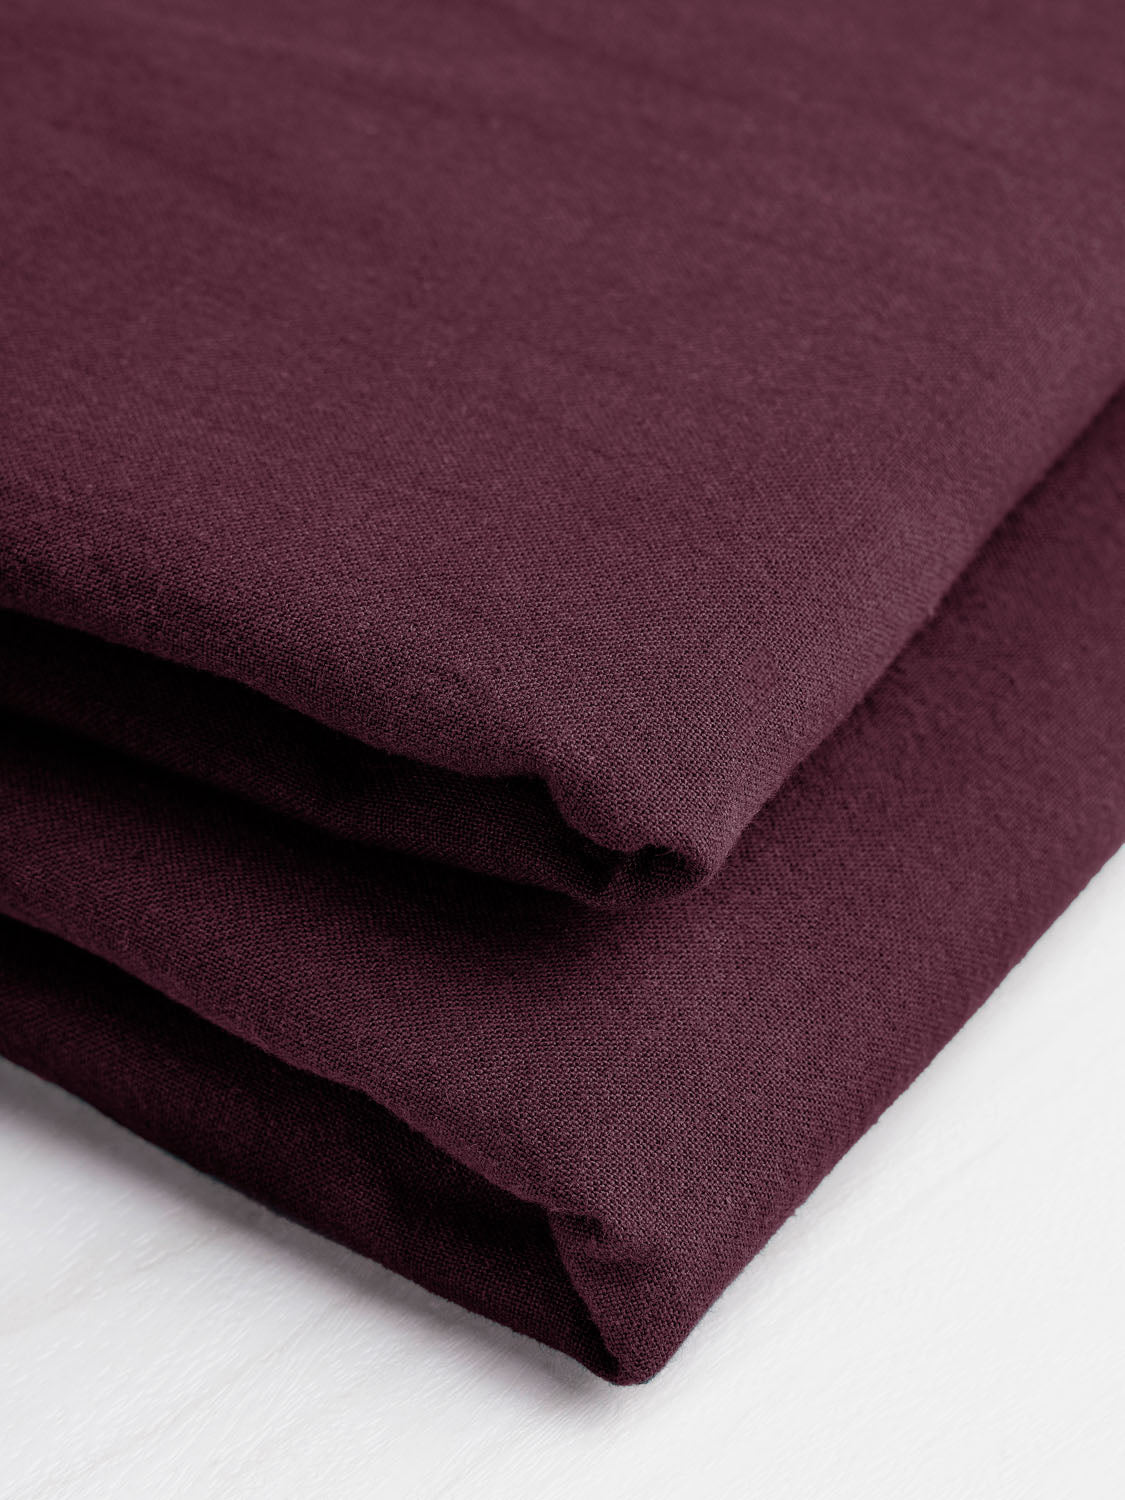 Tumbled Non-Stretch Cotton - Mulberry | Core Fabrics